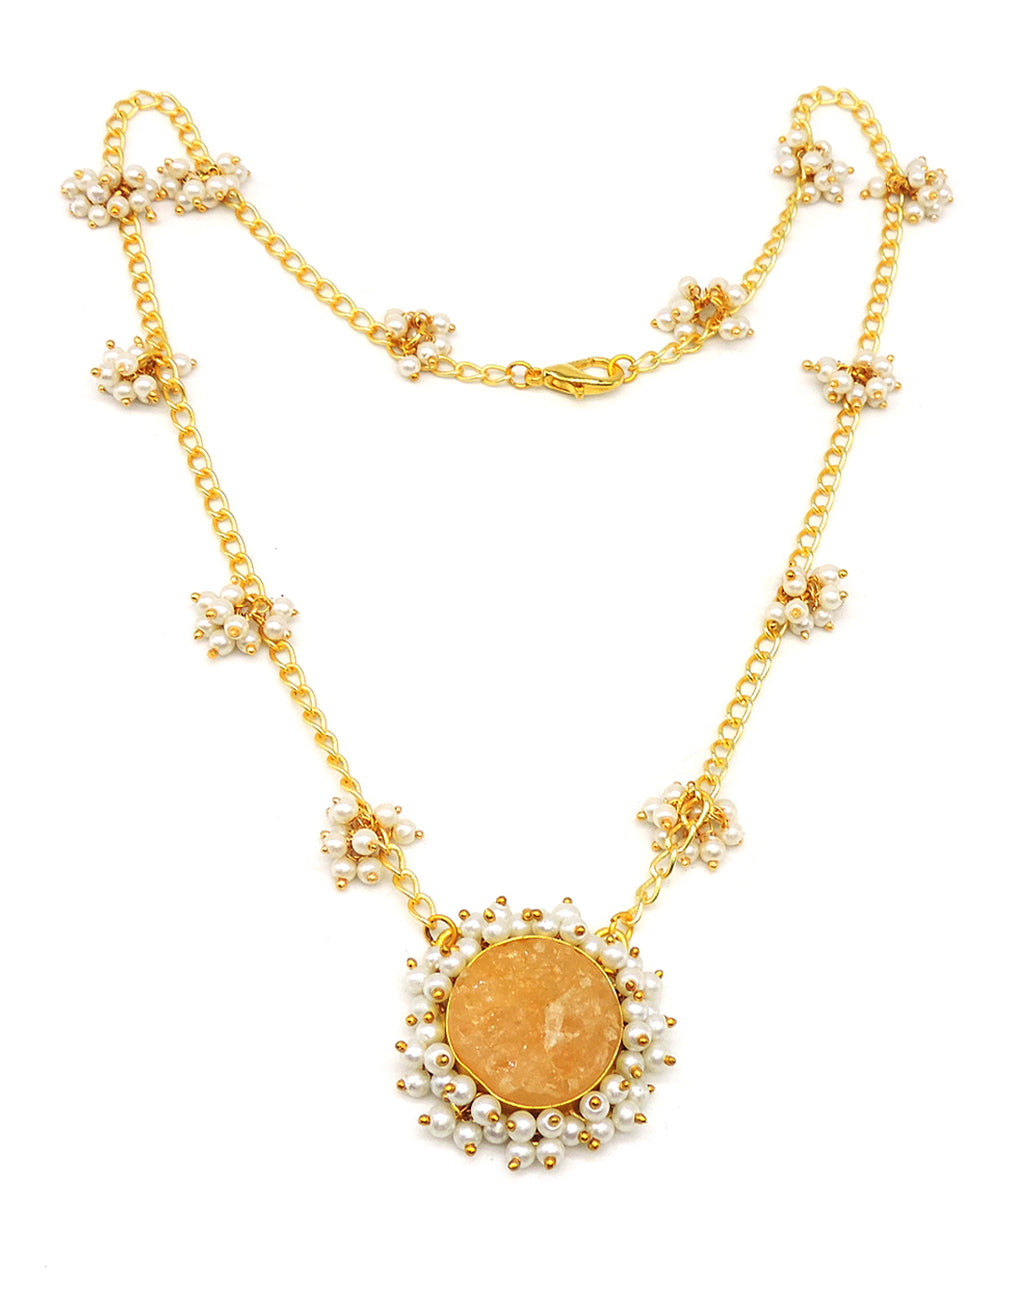 Bloom Necklace (Jasper) - Statement Necklaces - Gold-Plated & Hypoallergenic Jewellery - Made in India - Dubai Jewellery - Dori